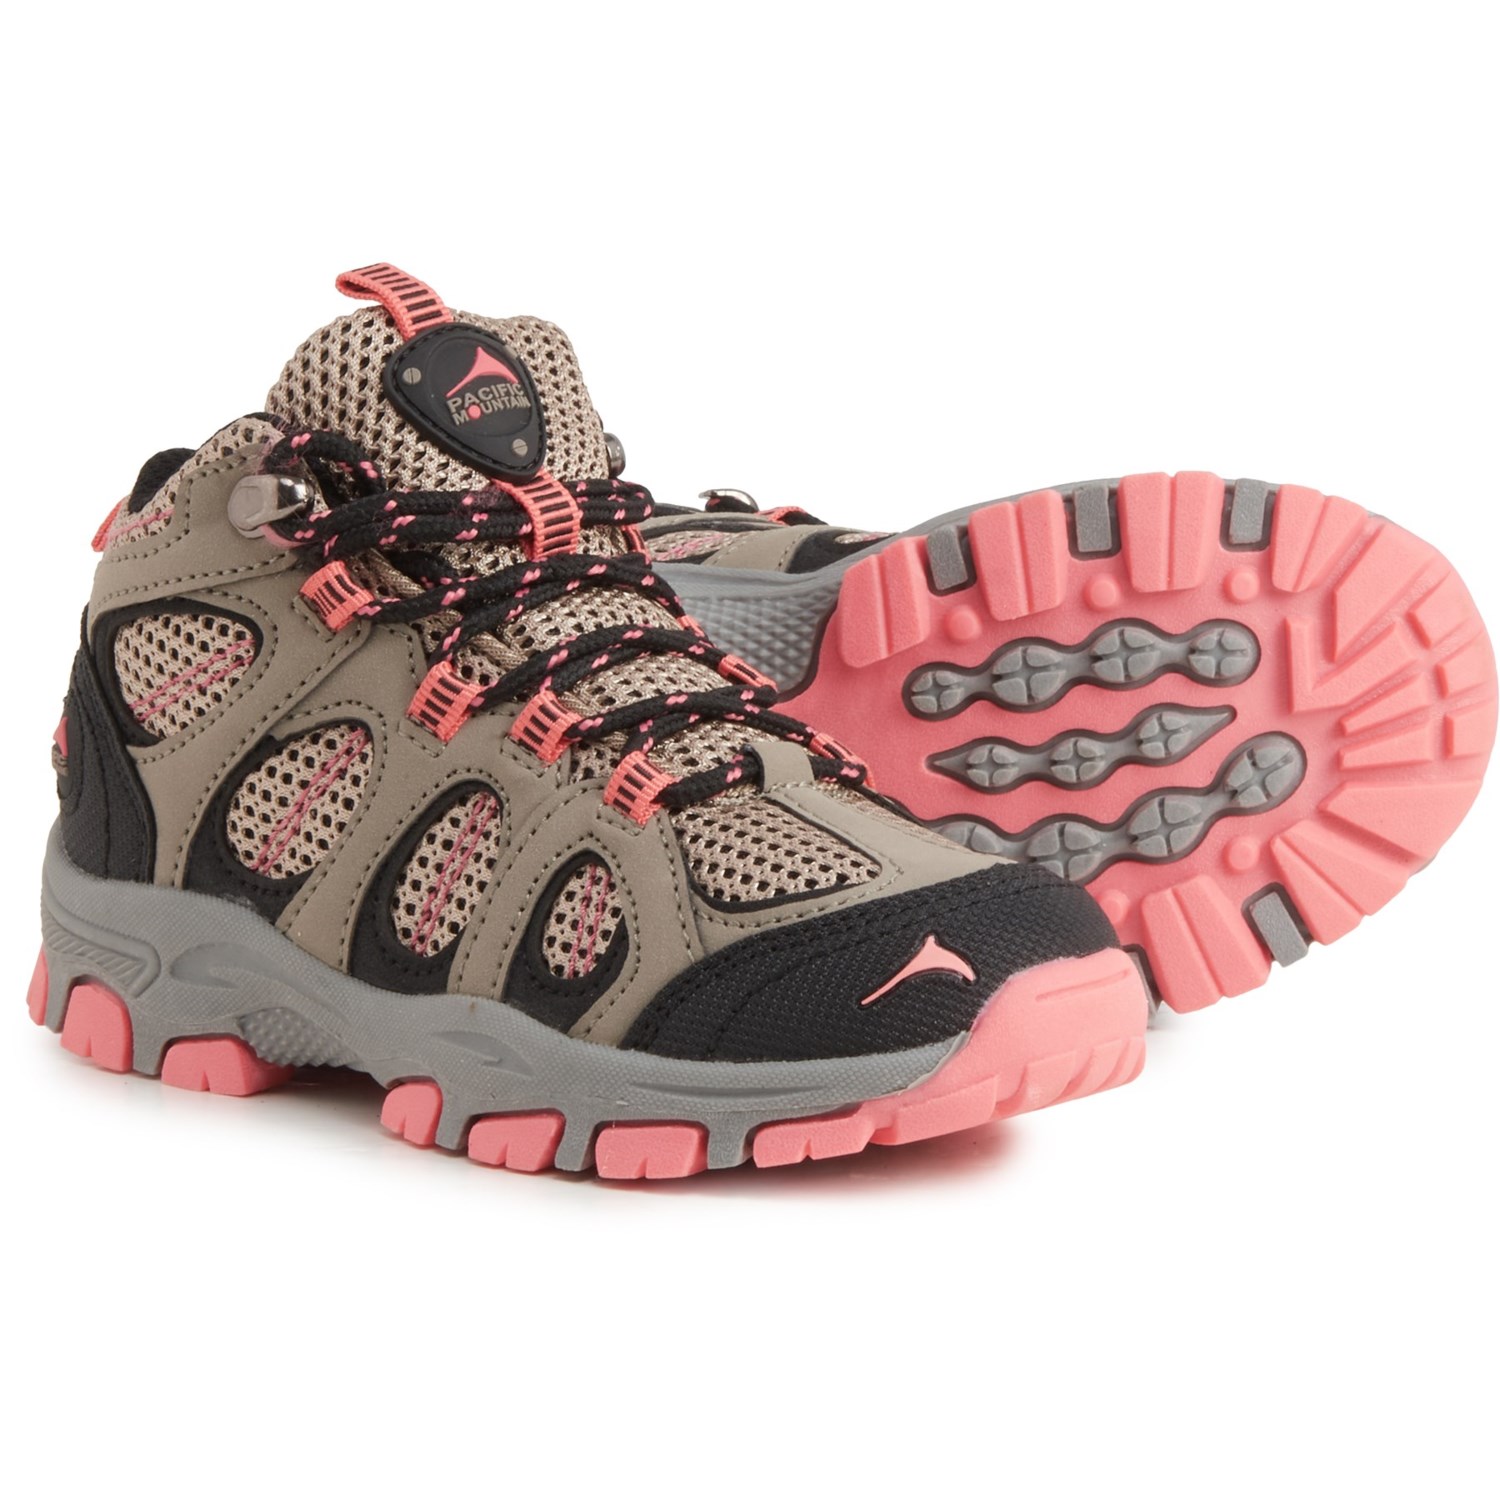 Pacific Mountain Girls Cedar Jr. Hiking Boots - Waterproof - Save 53%